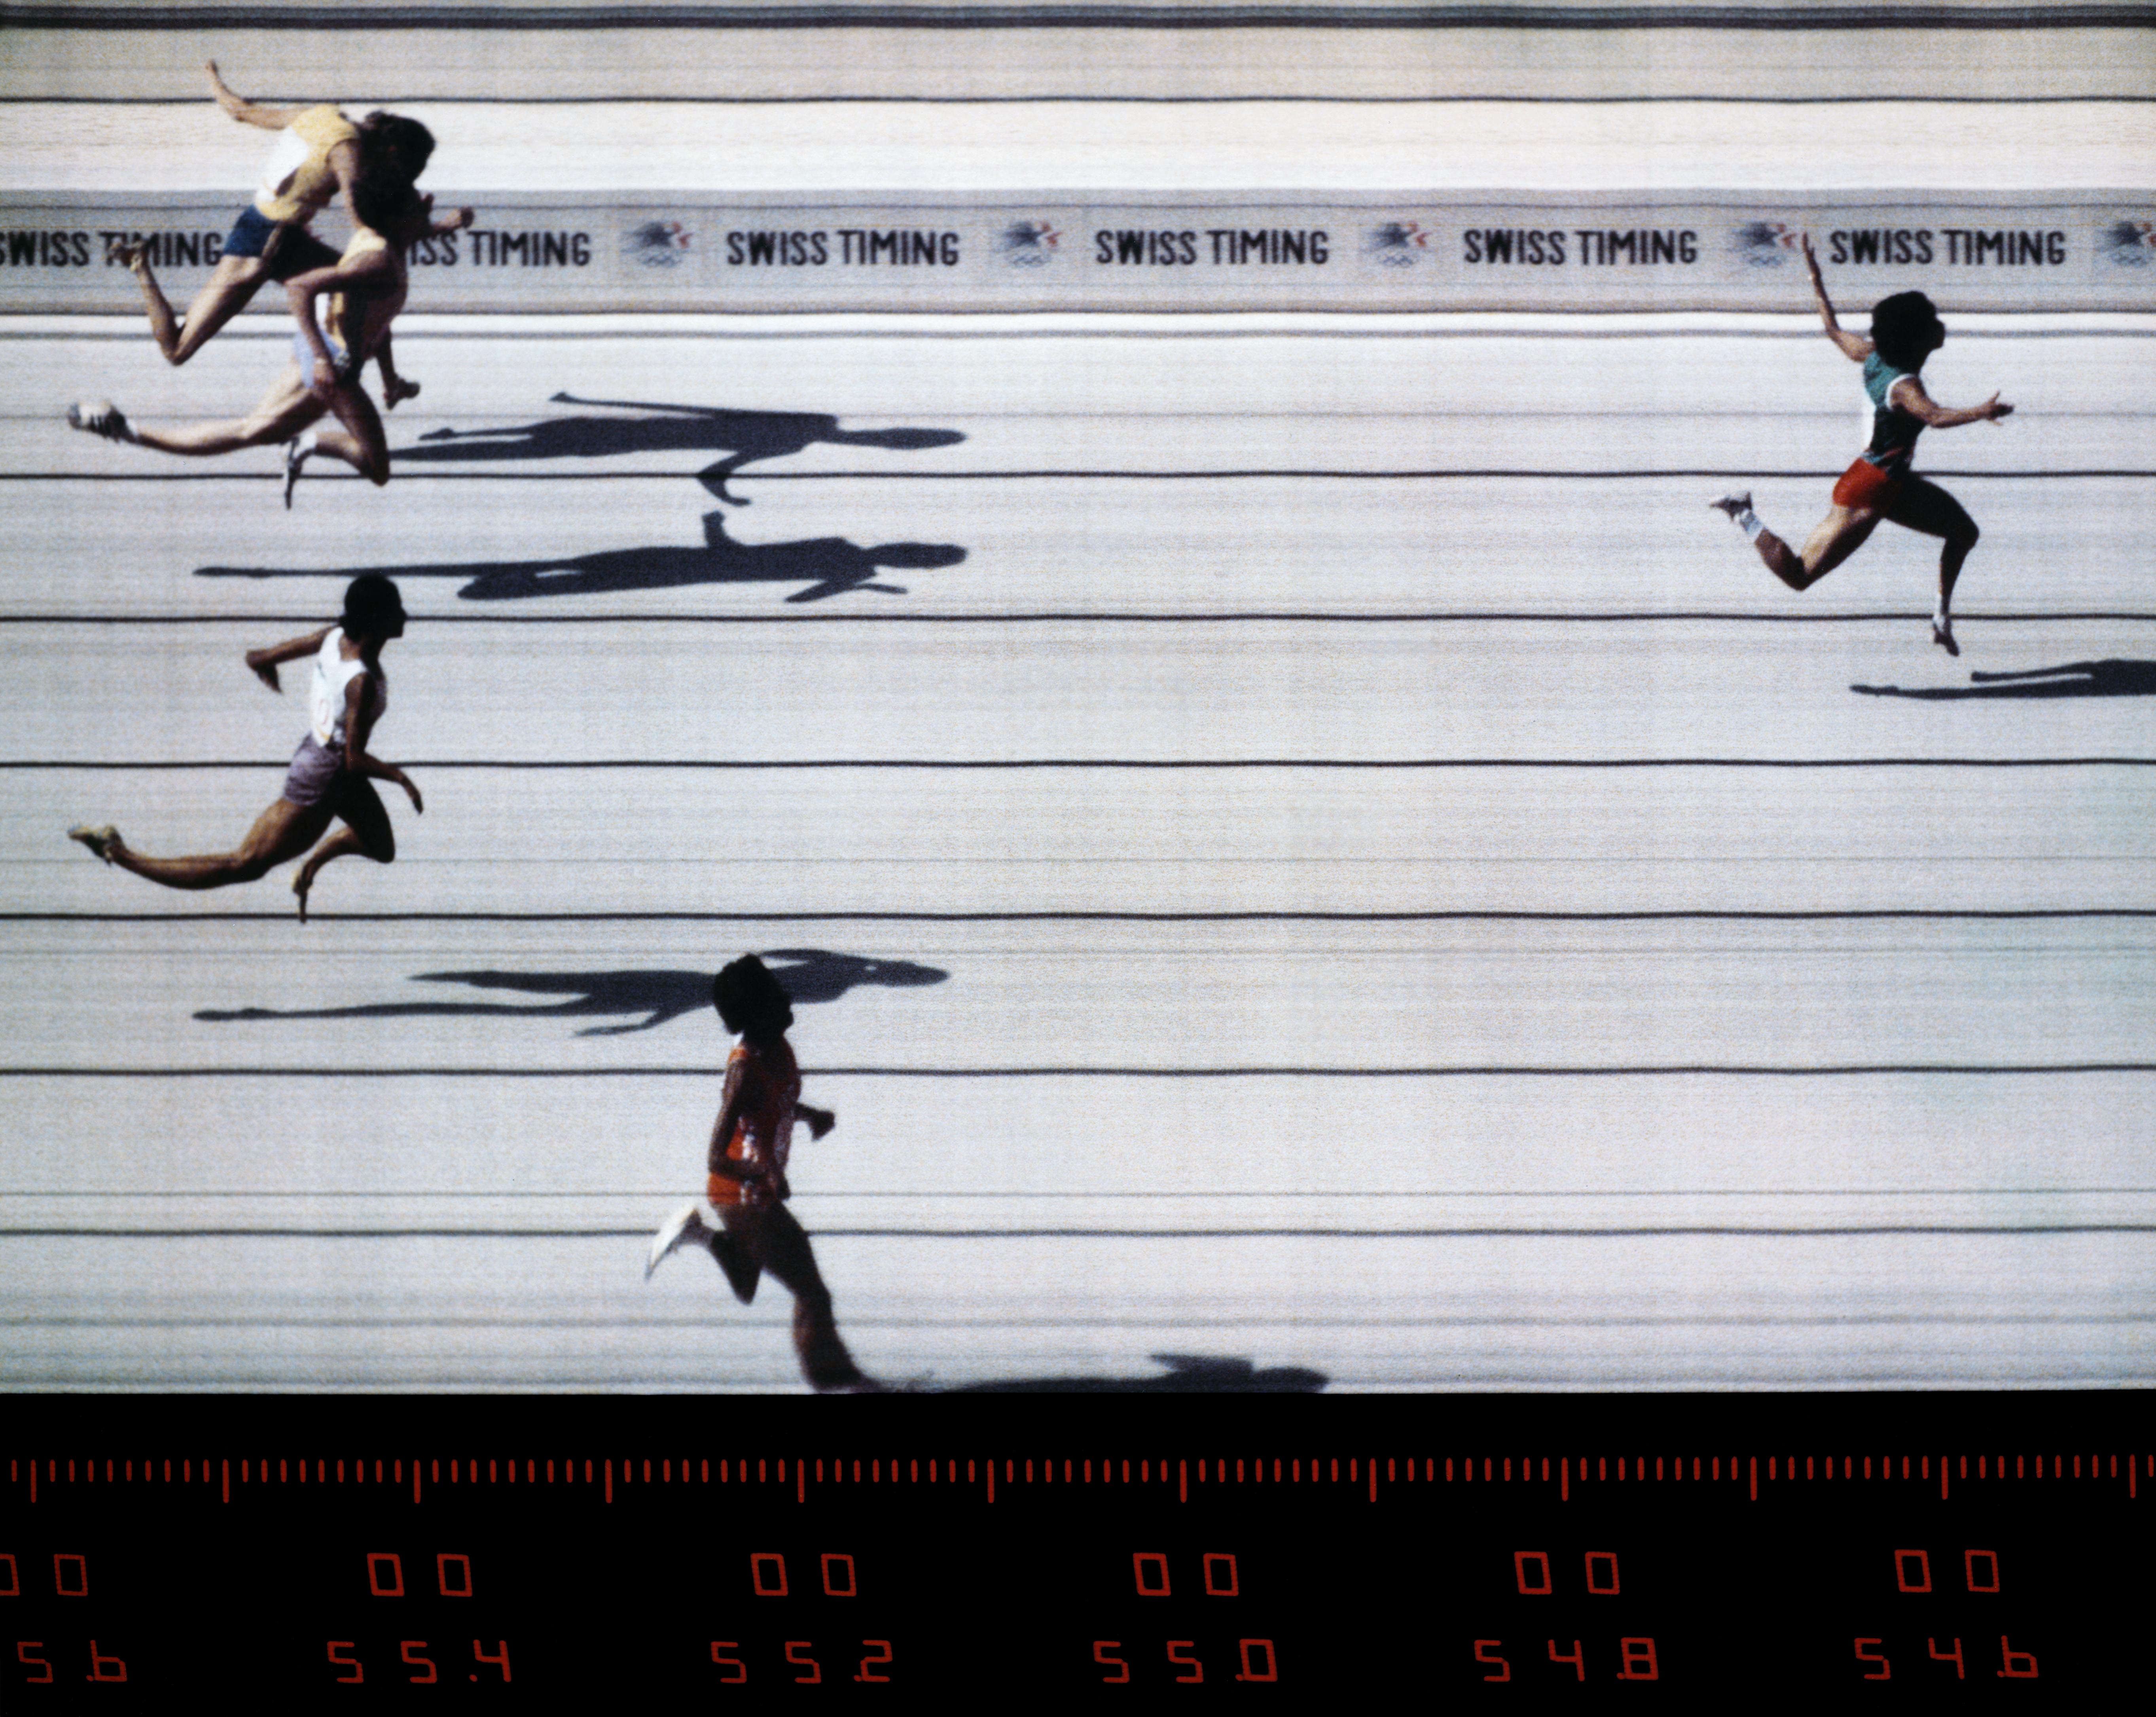 Los Angeles 1984 OG, Athletics, 400m hurdles Women - Final, photo finish.